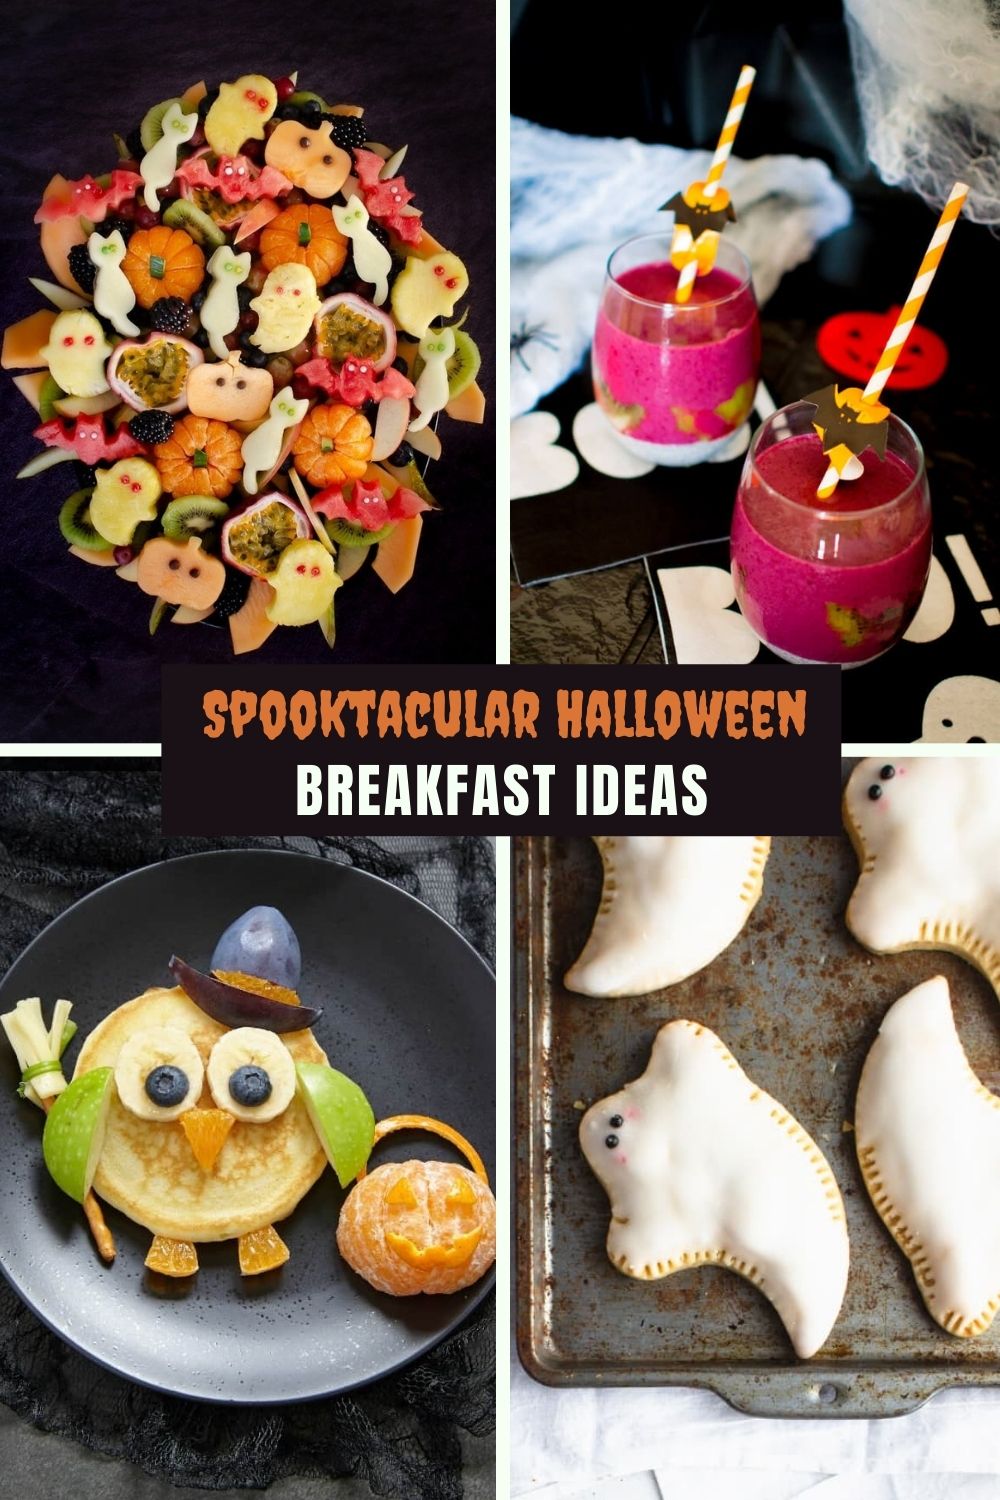 Fun and healthy Halloween breakfast ideas for kids